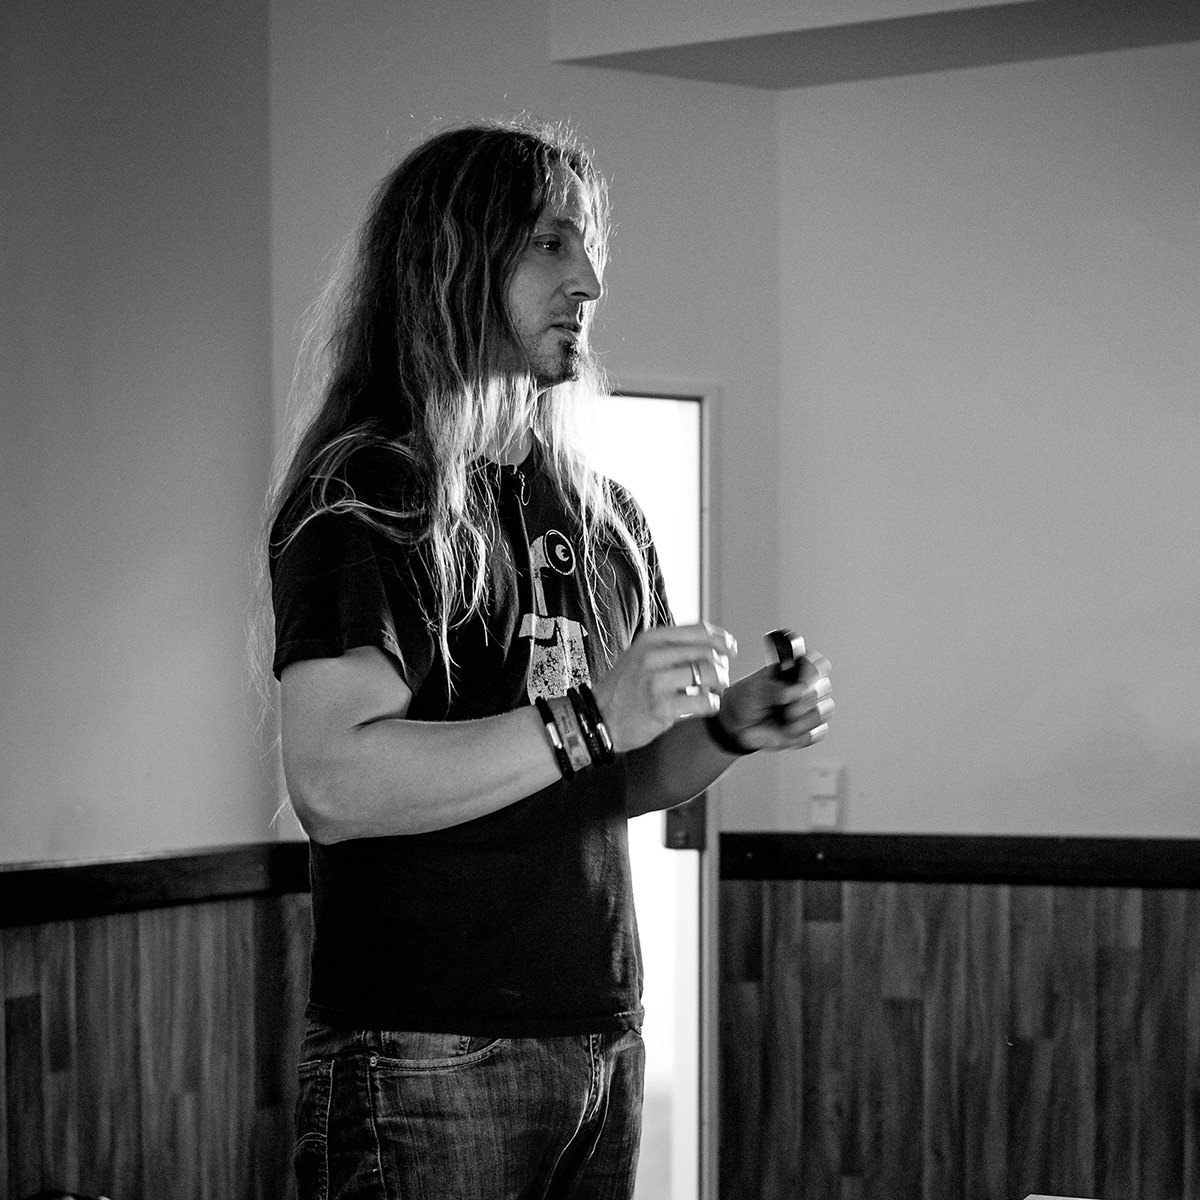 Photo showing me, Marc Thiele, speaking at Webworker Ruhr Meetup